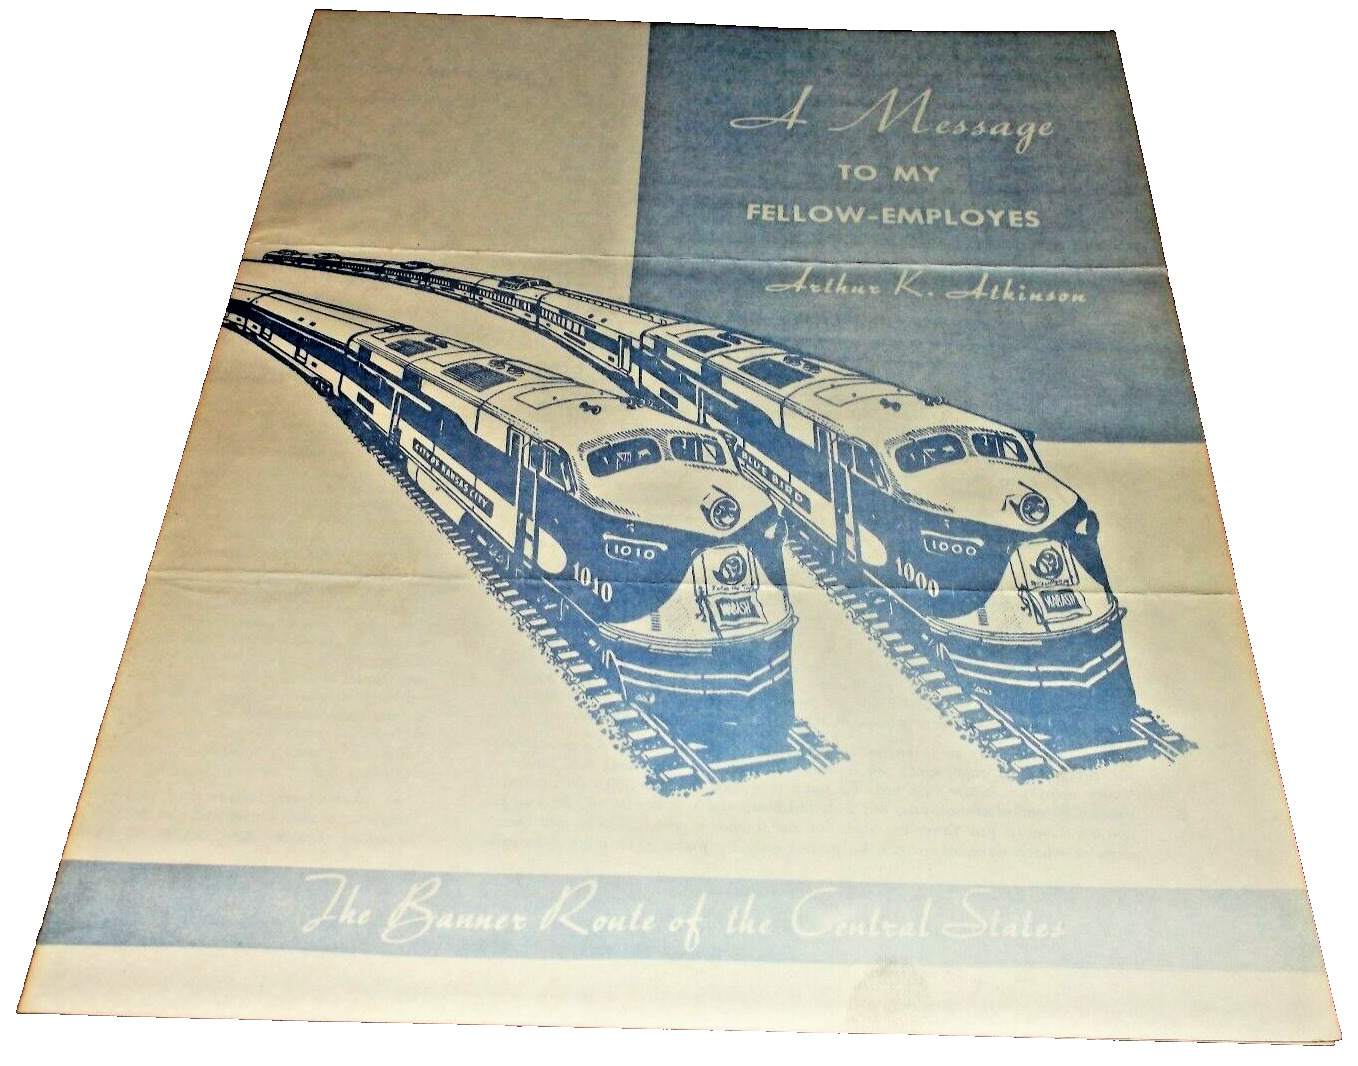 1952 WABASH RAILROAD ARTHUR ATKINSON MESSAGE TO FELLOW EMPLOYEES